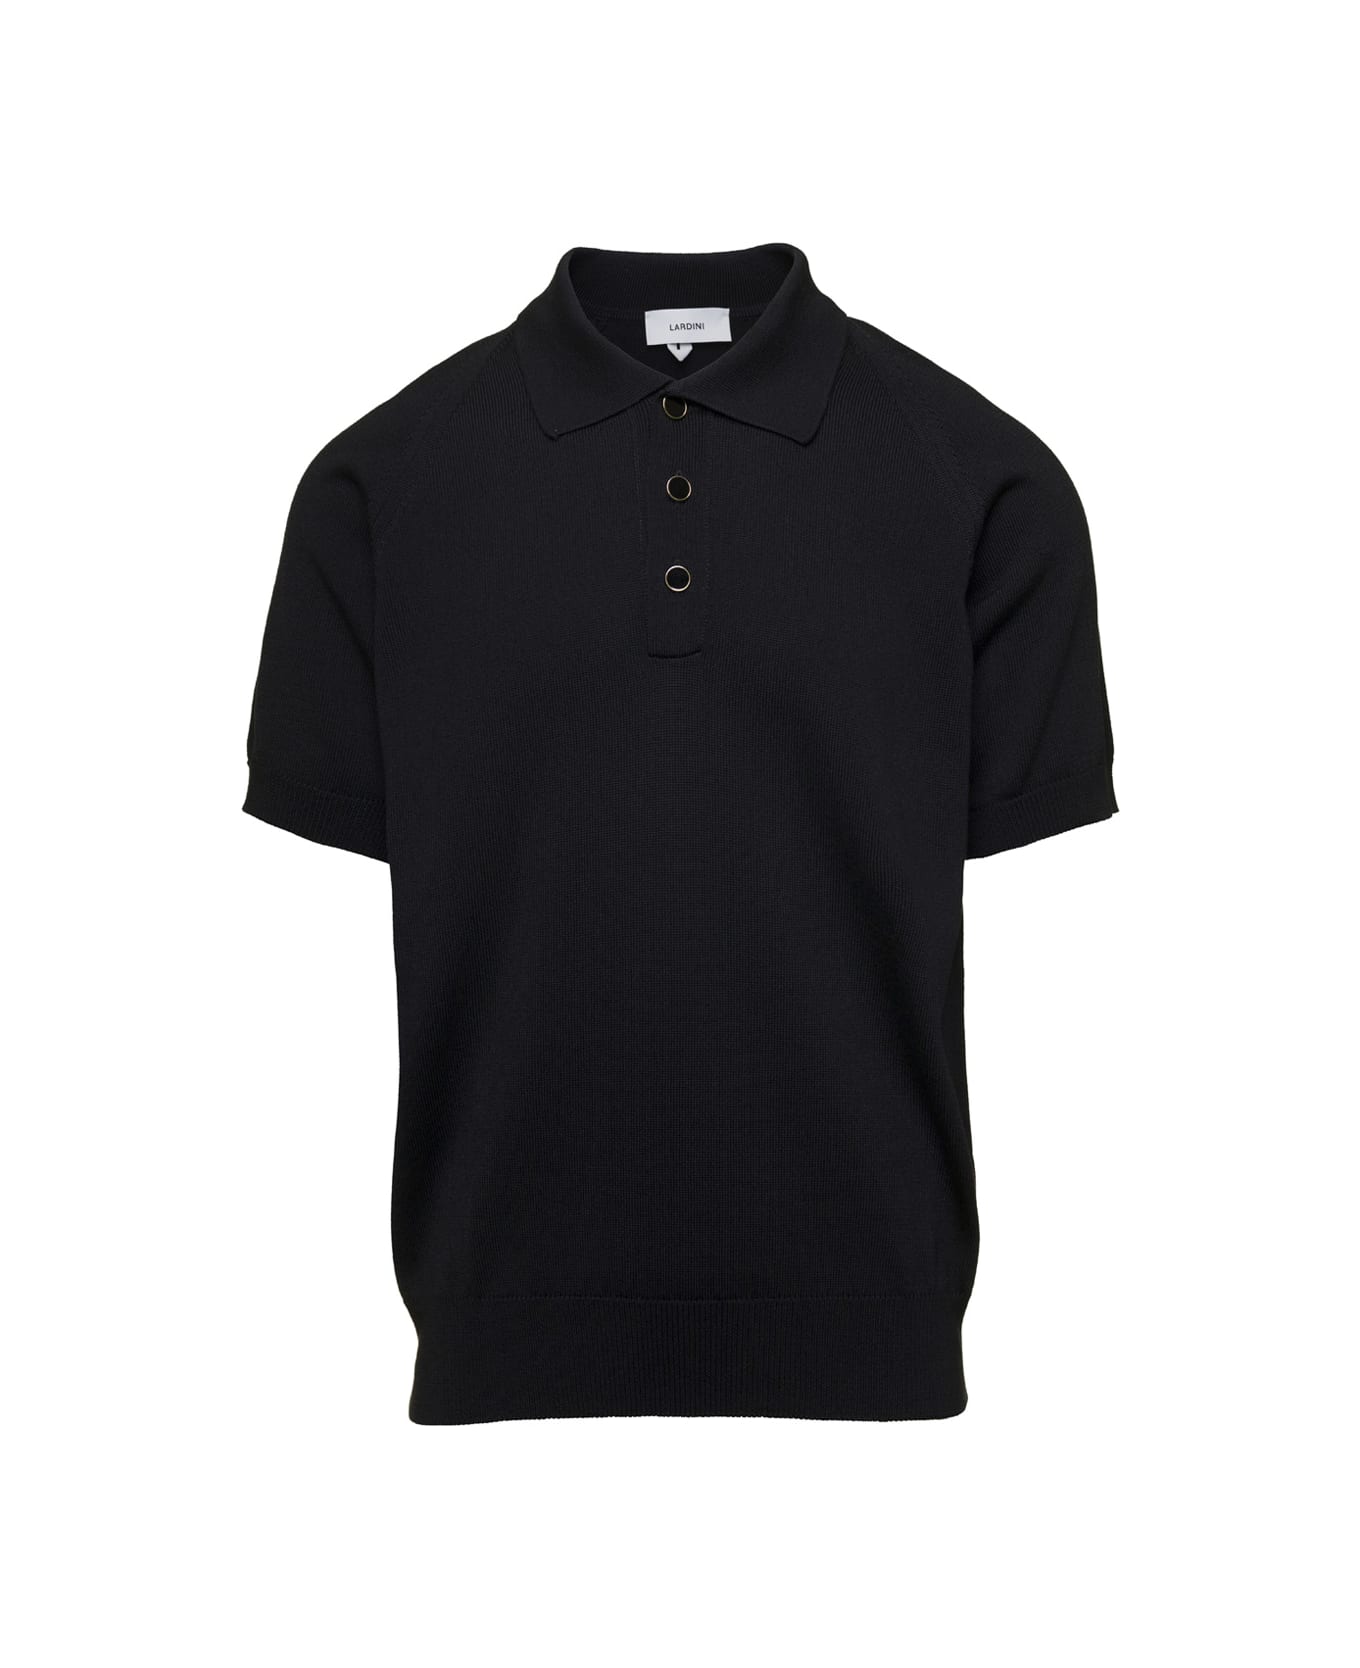 Lardini Polo Shirt - Black シャツ